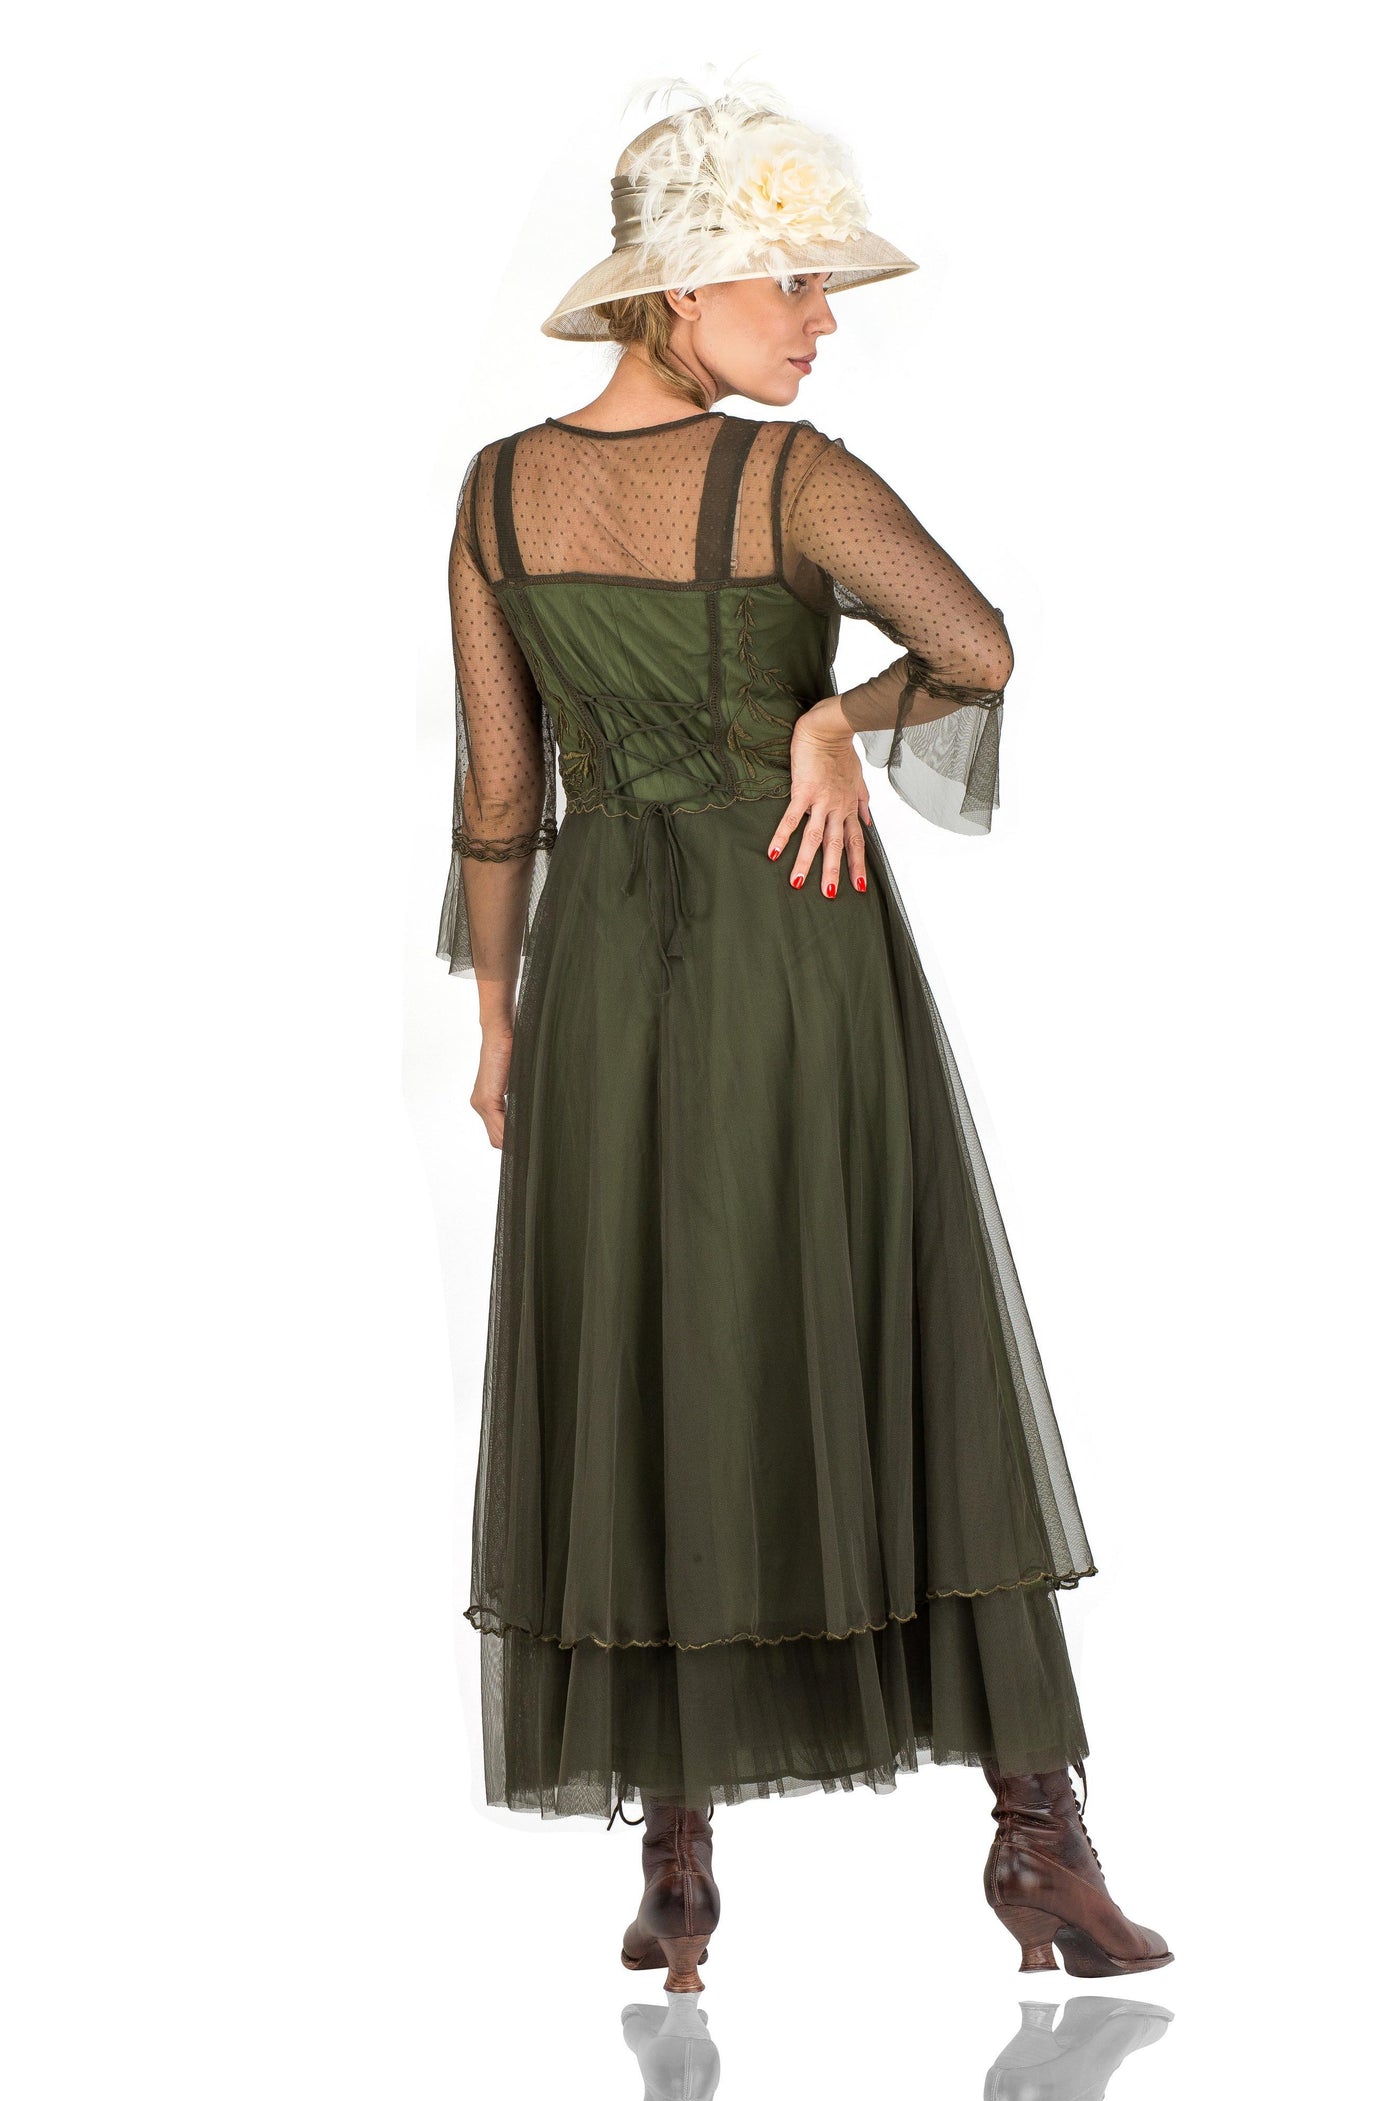 Victorian Dress in Emerald